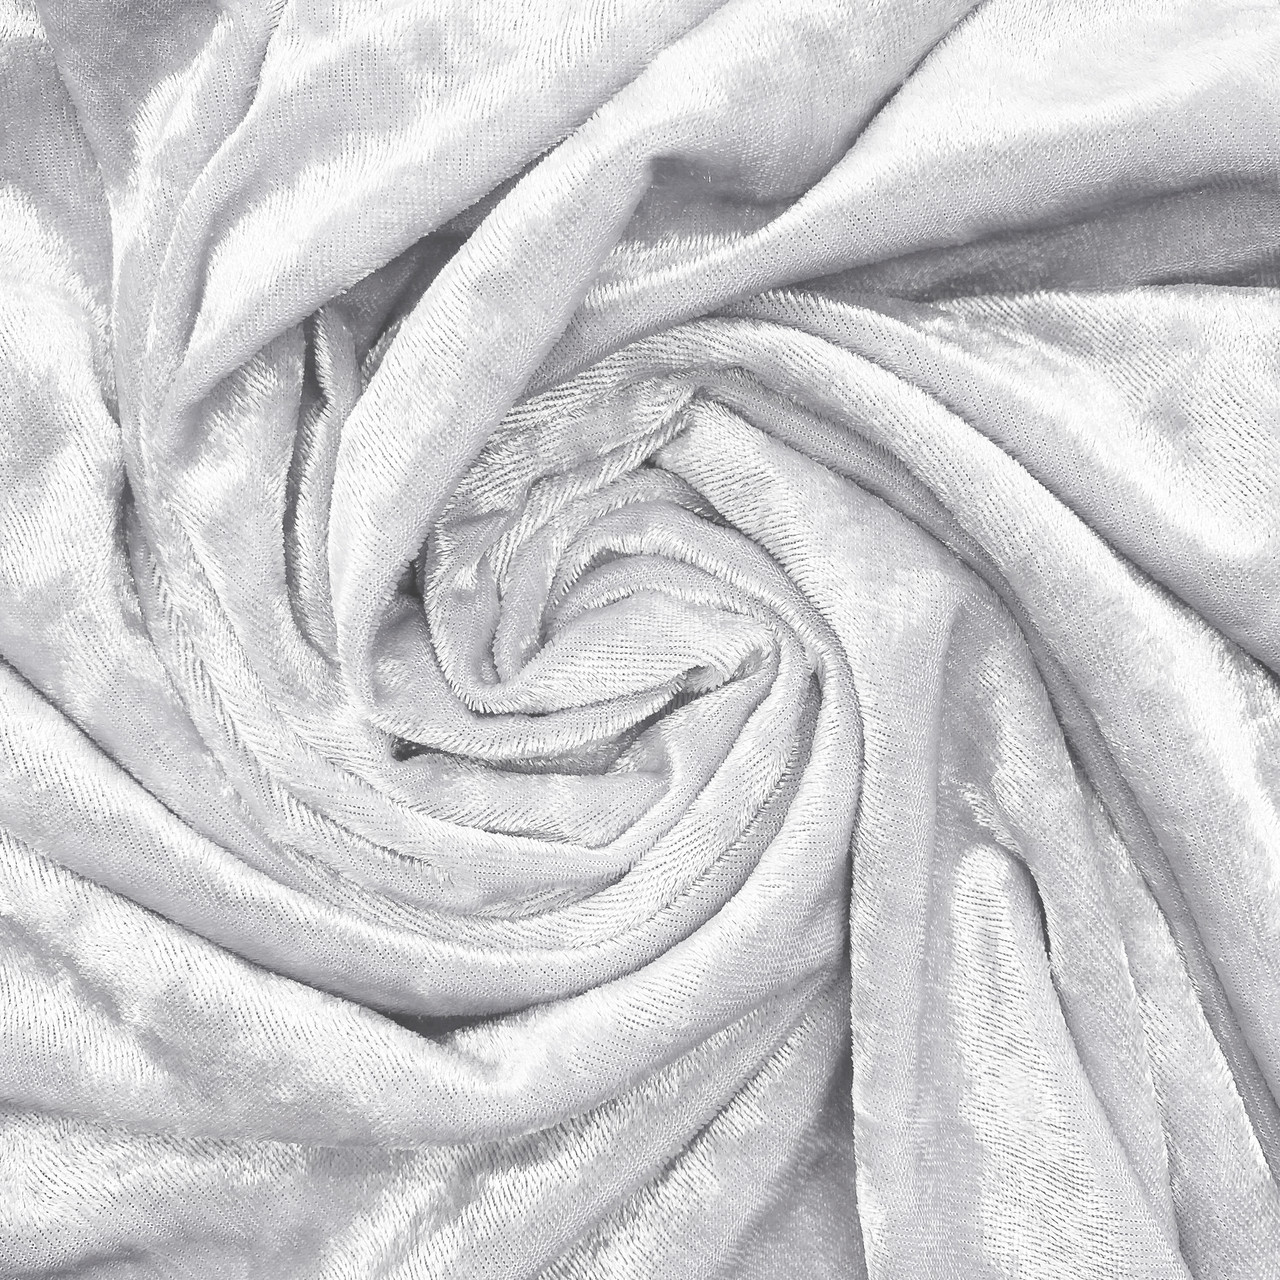 Panne Crushed Velvet 60 - Dusty Rose – Overseas Fabrics